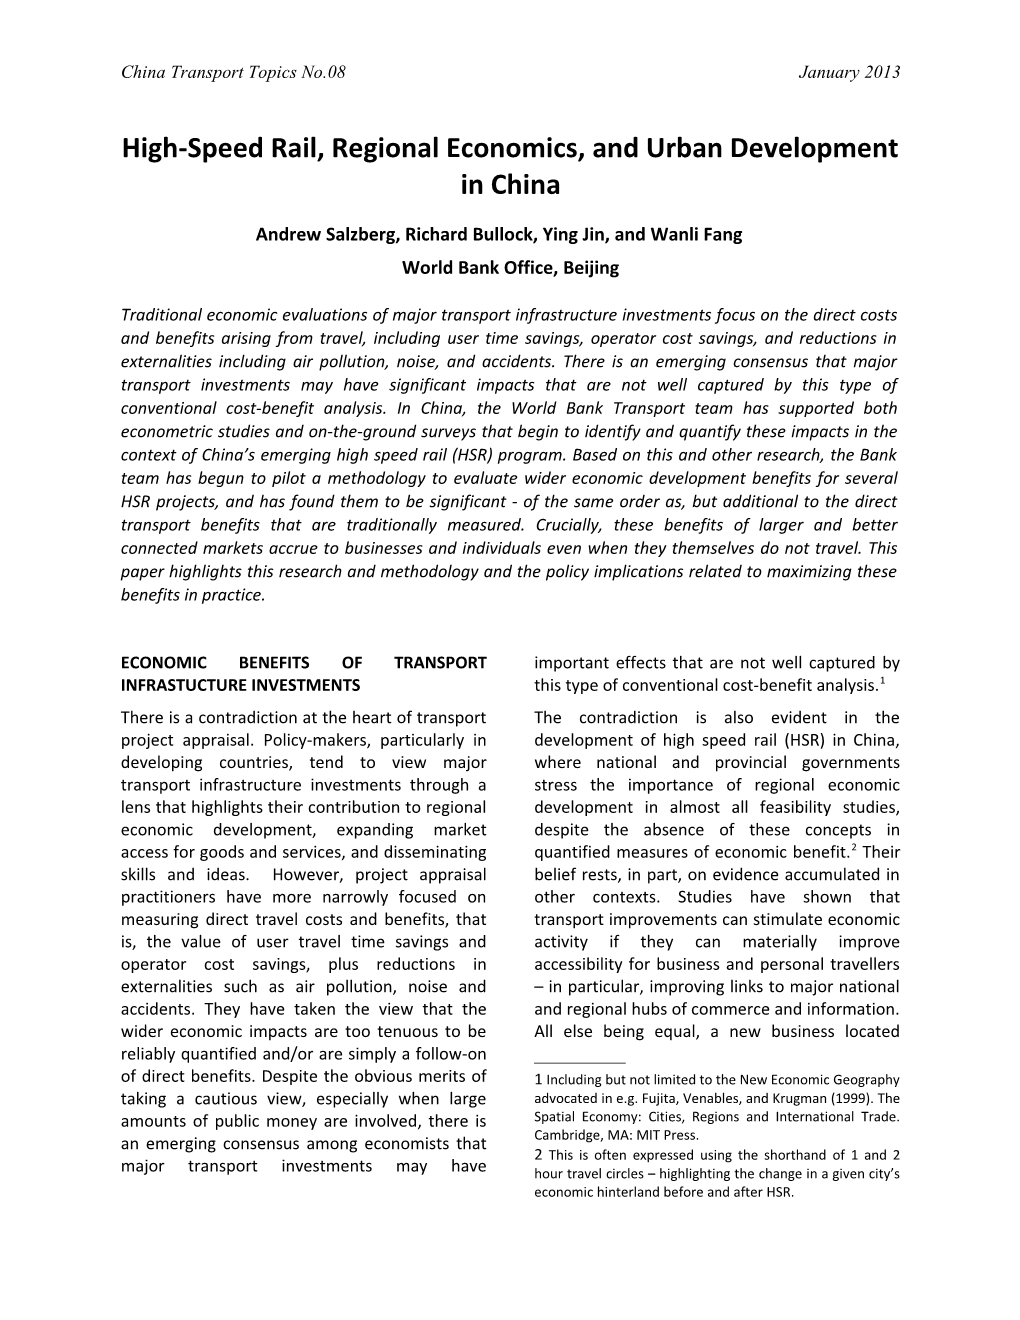 High-Speed Rail, Regional Economics, and Urban Development in China